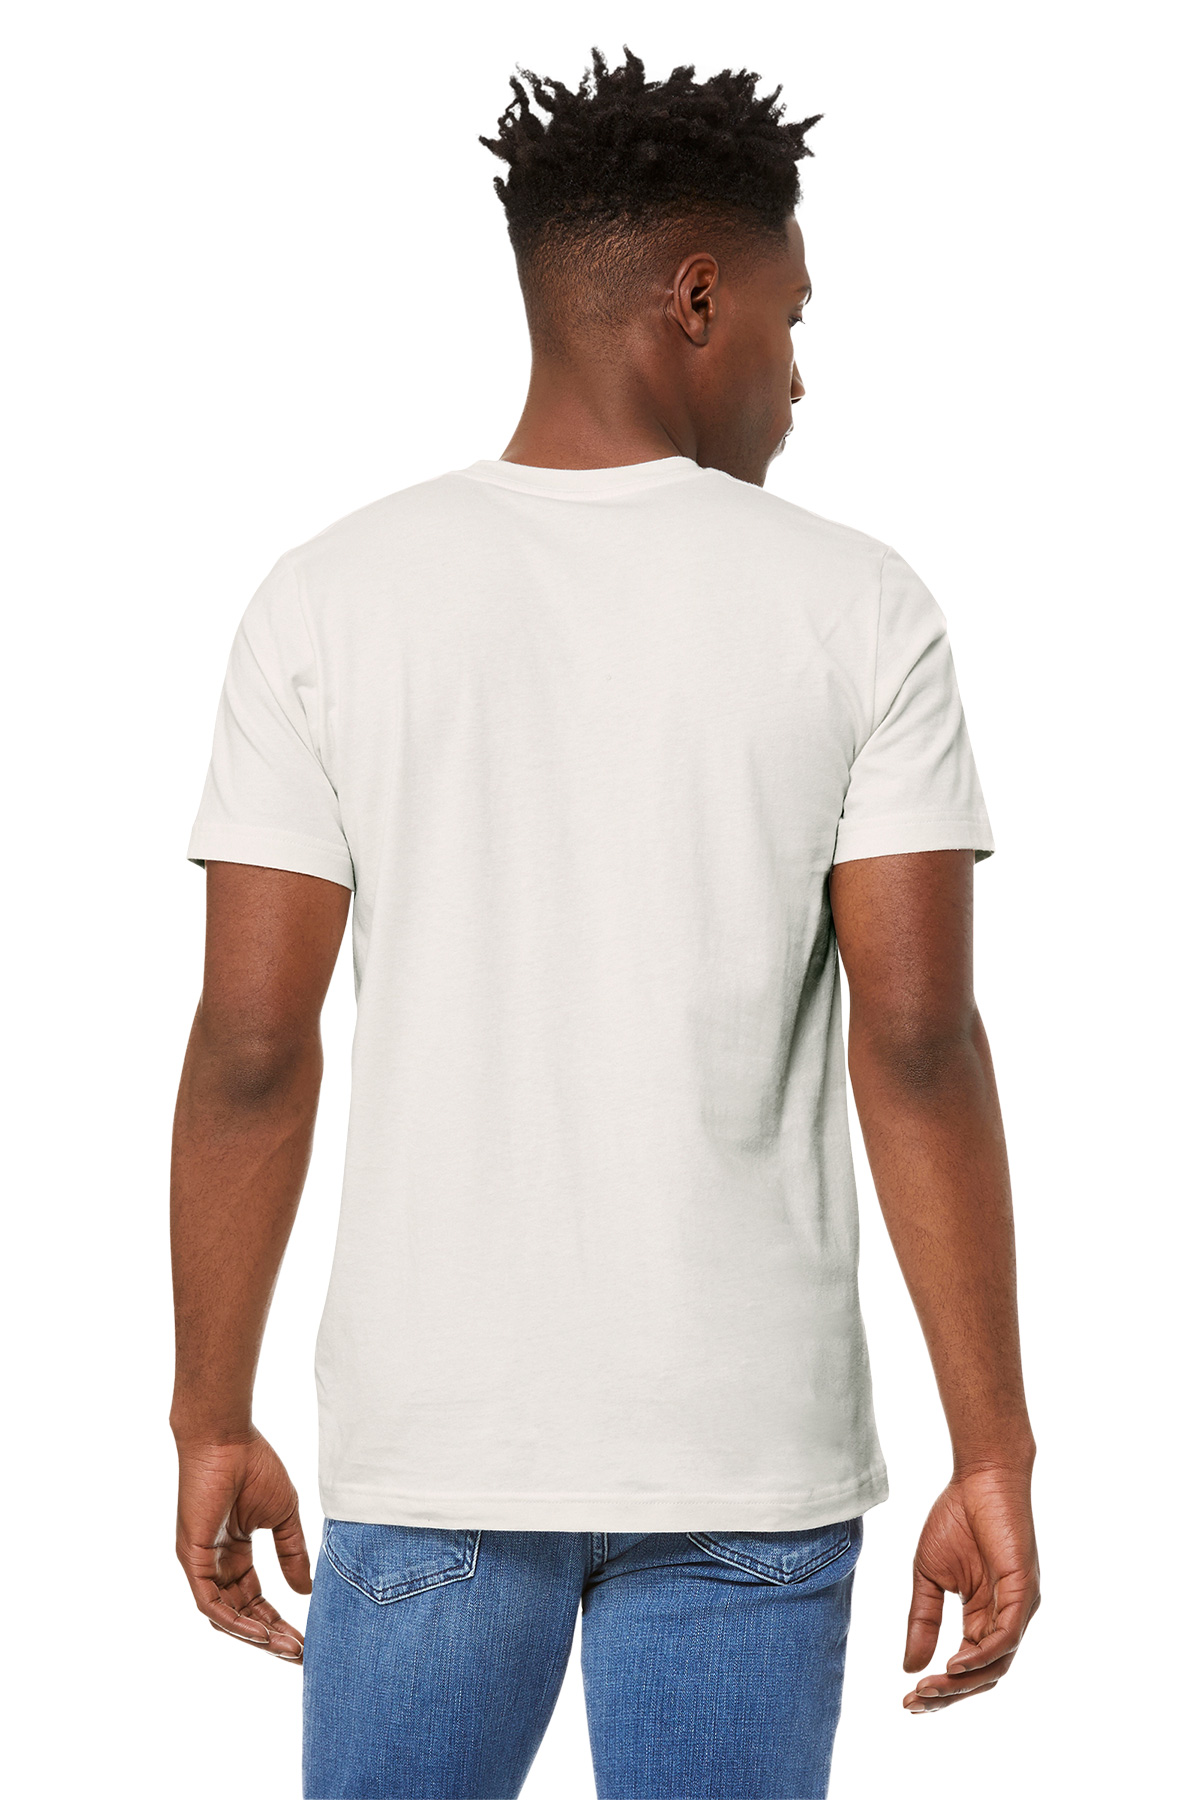 Back View White T Shirt Mockup White Man T-shirt Mockup 